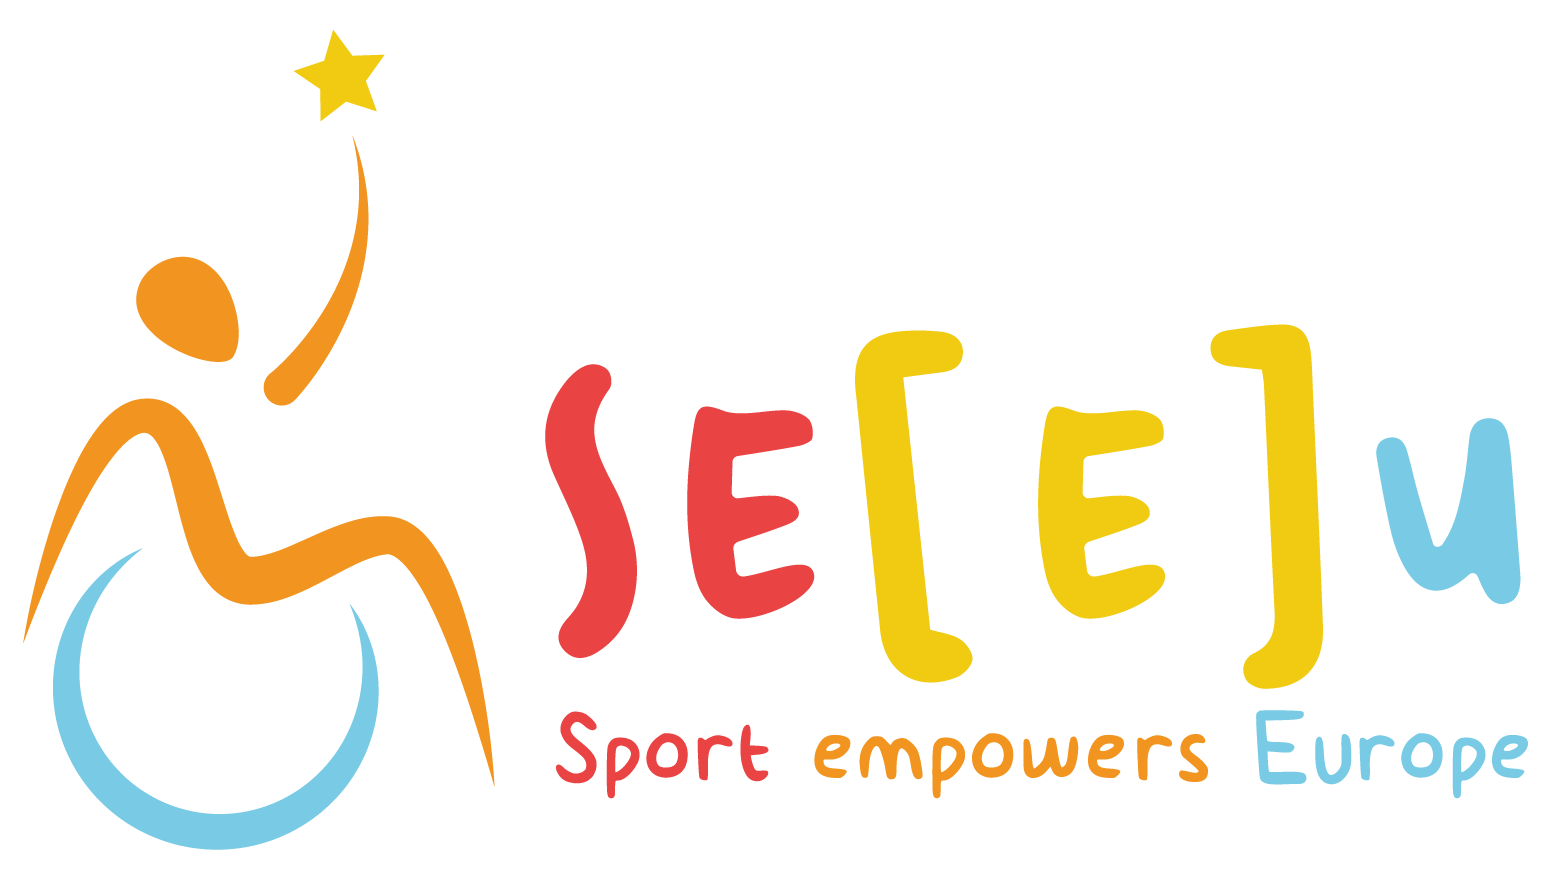 Sport empowers Europe